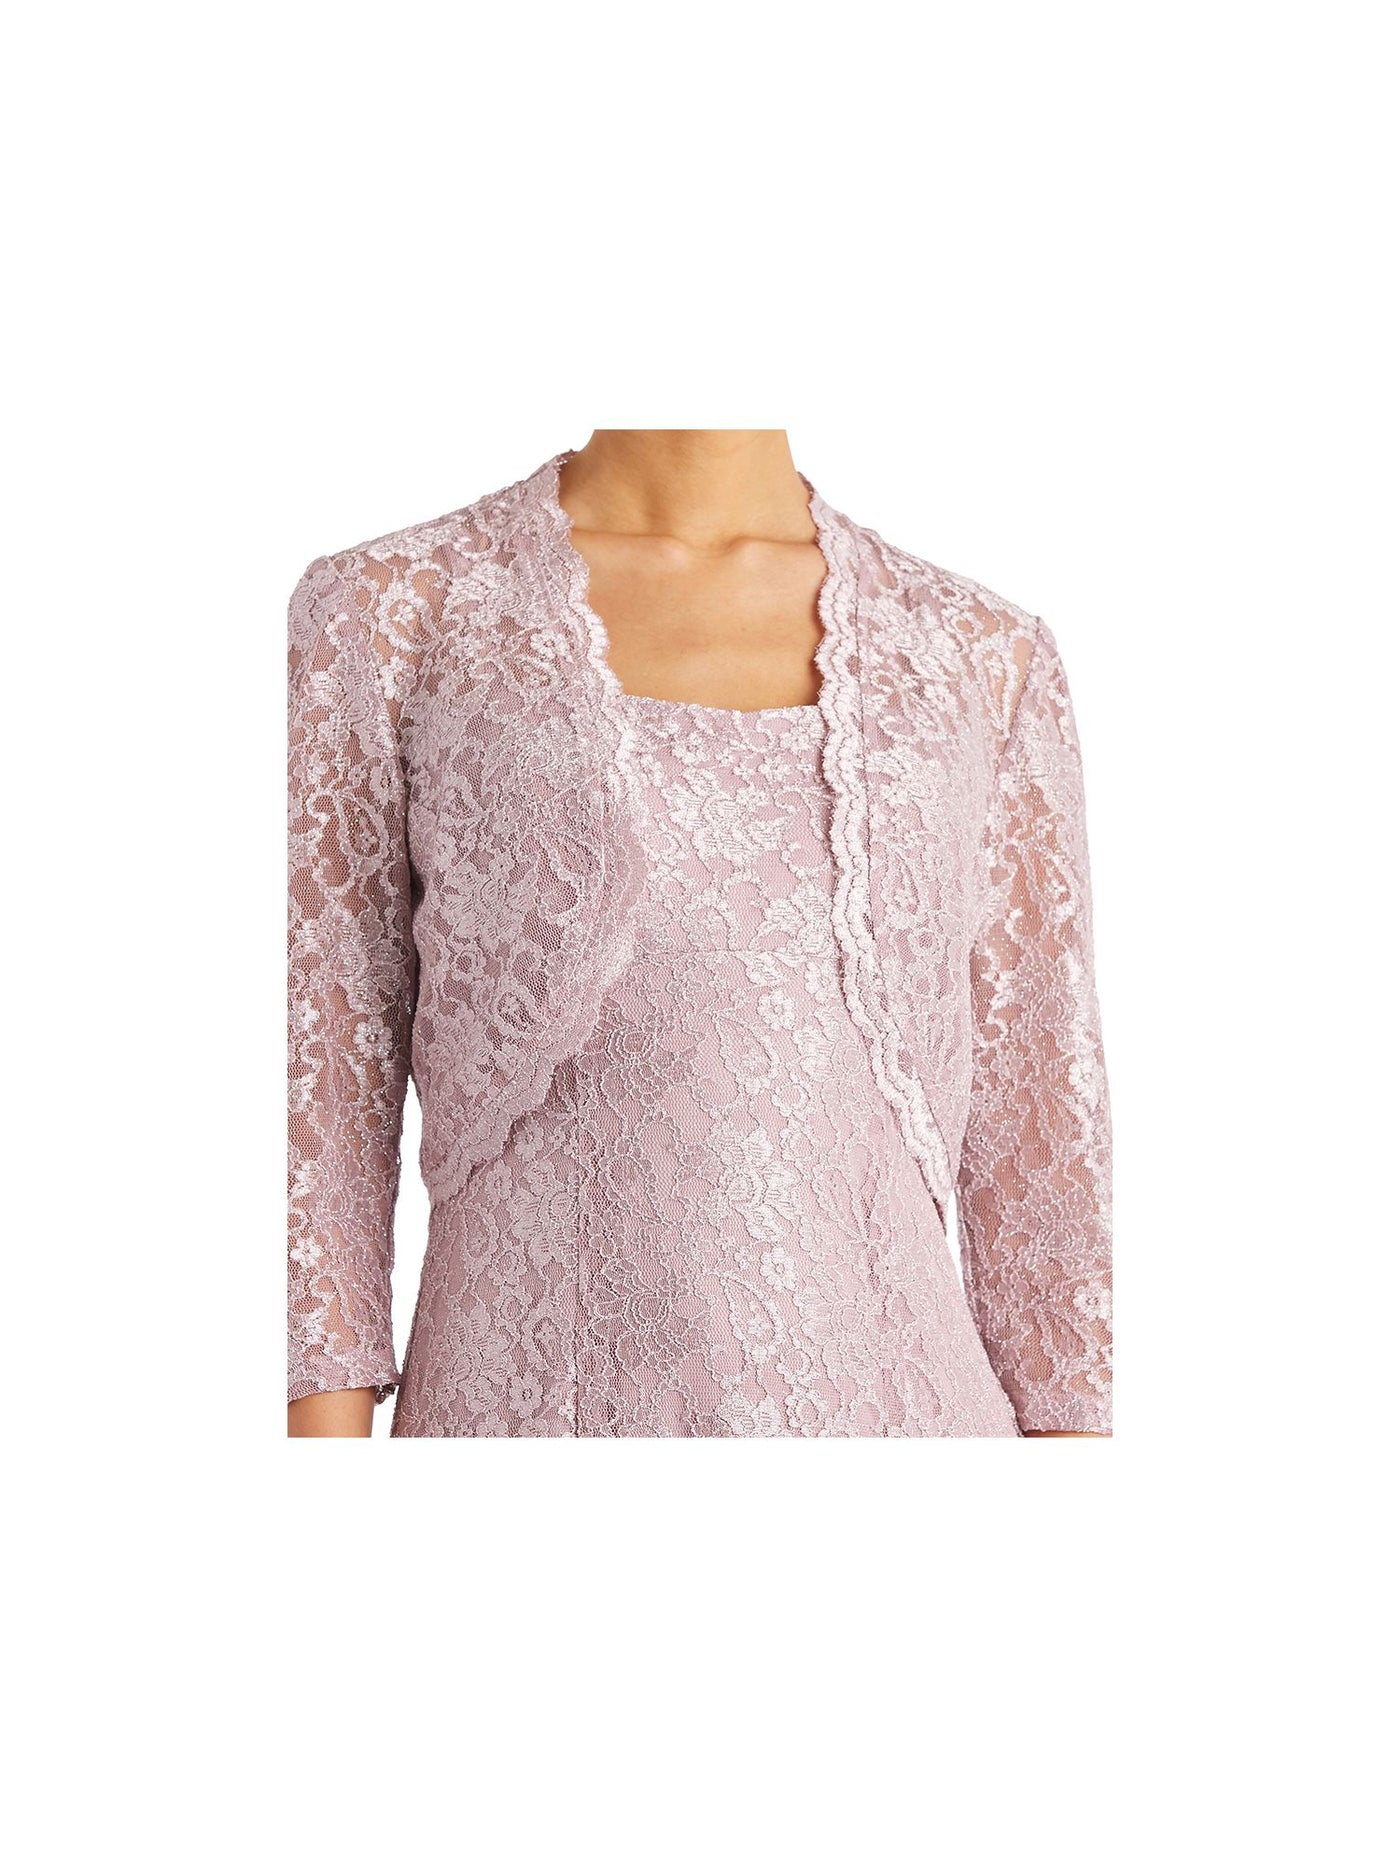 R&M RICHARDS Womens Pink Glitter Shrug Wear To Work Bolero Jacket Petites 8P